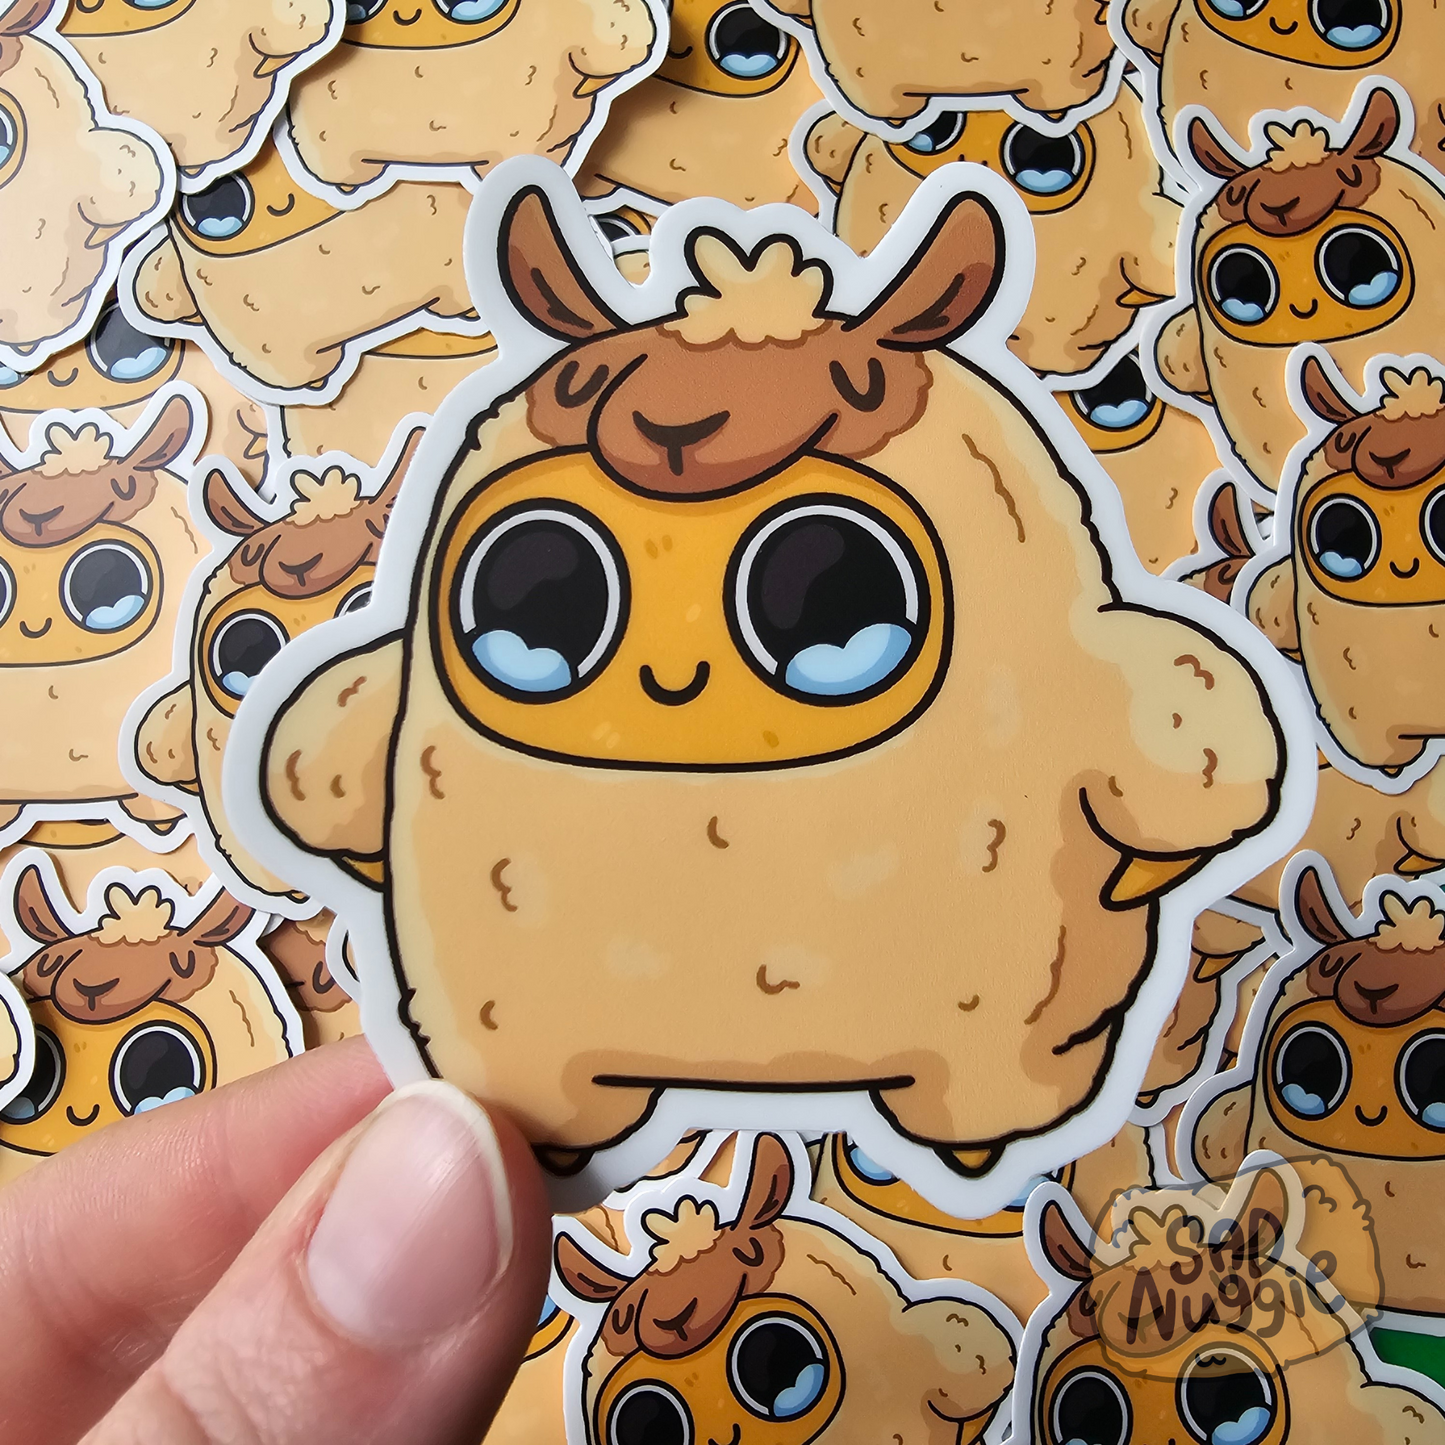 Llama Sad Nuggie Sticker